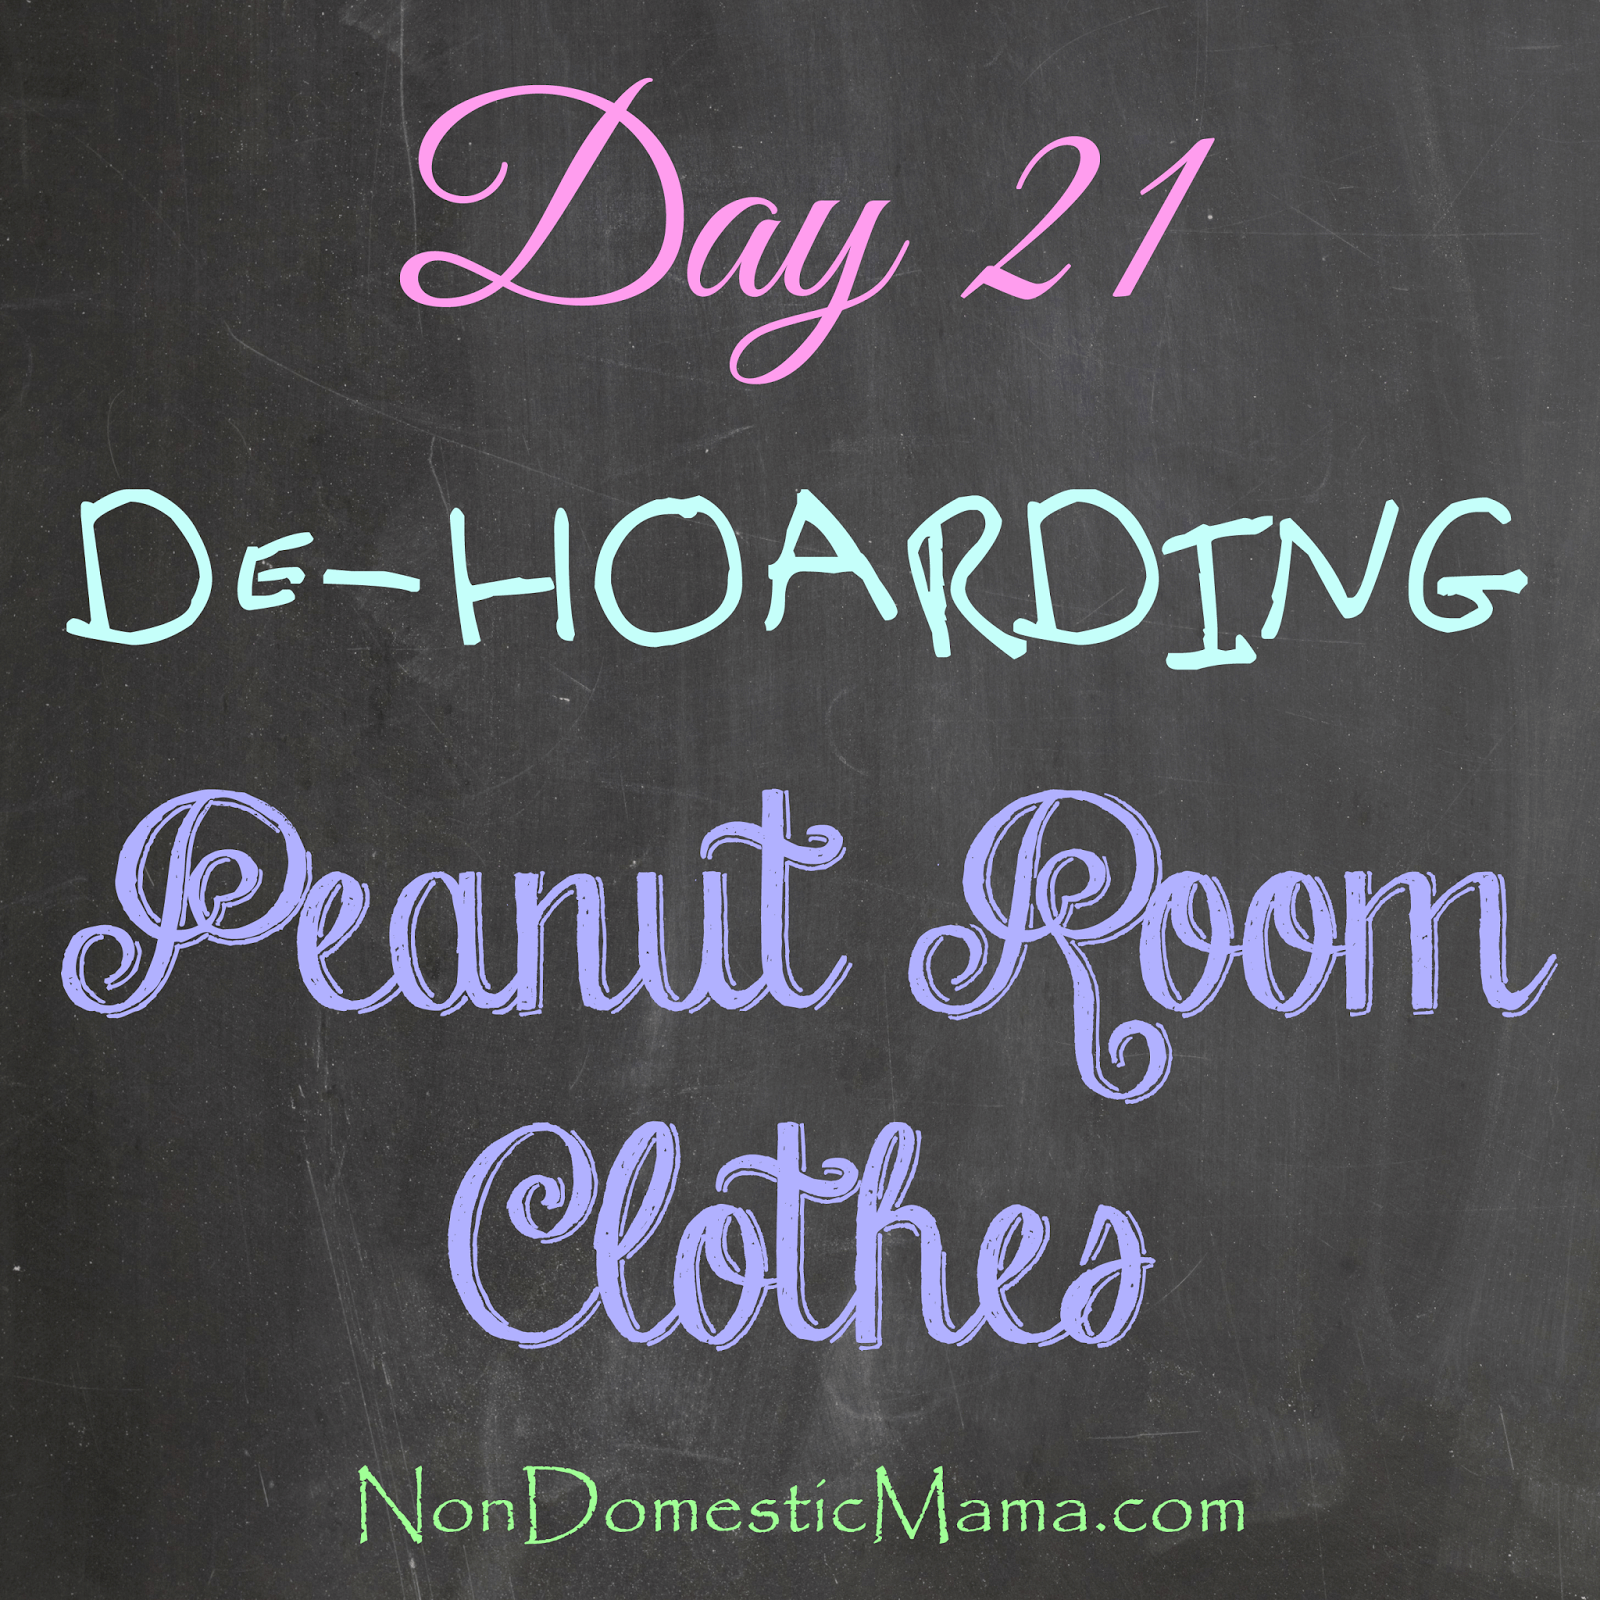 {Day 21} Peanut Clothes - 31 Days of De-Hoarding #write31days #dehoarding